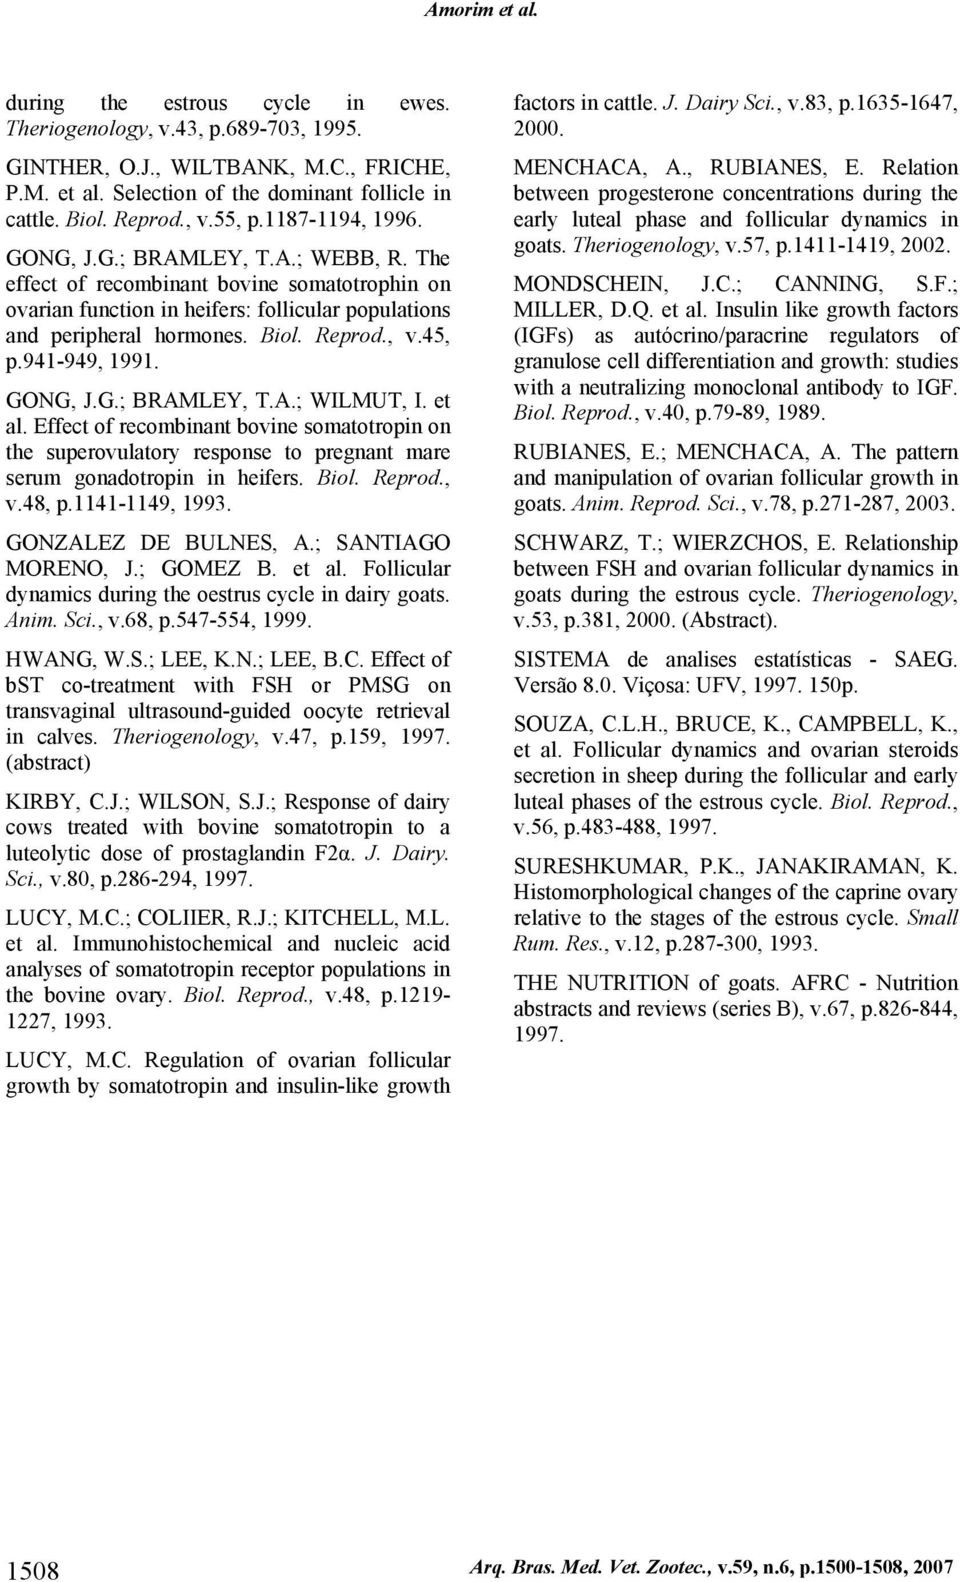 Reprod., v.45, p.941-949, 1991. GONG, J.G.; BRAMLEY, T.A.; WILMUT, I. et al. Effect of recombinant bovine somatotropin on the superovulatory response to pregnant mare serum gonadotropin in heifers.